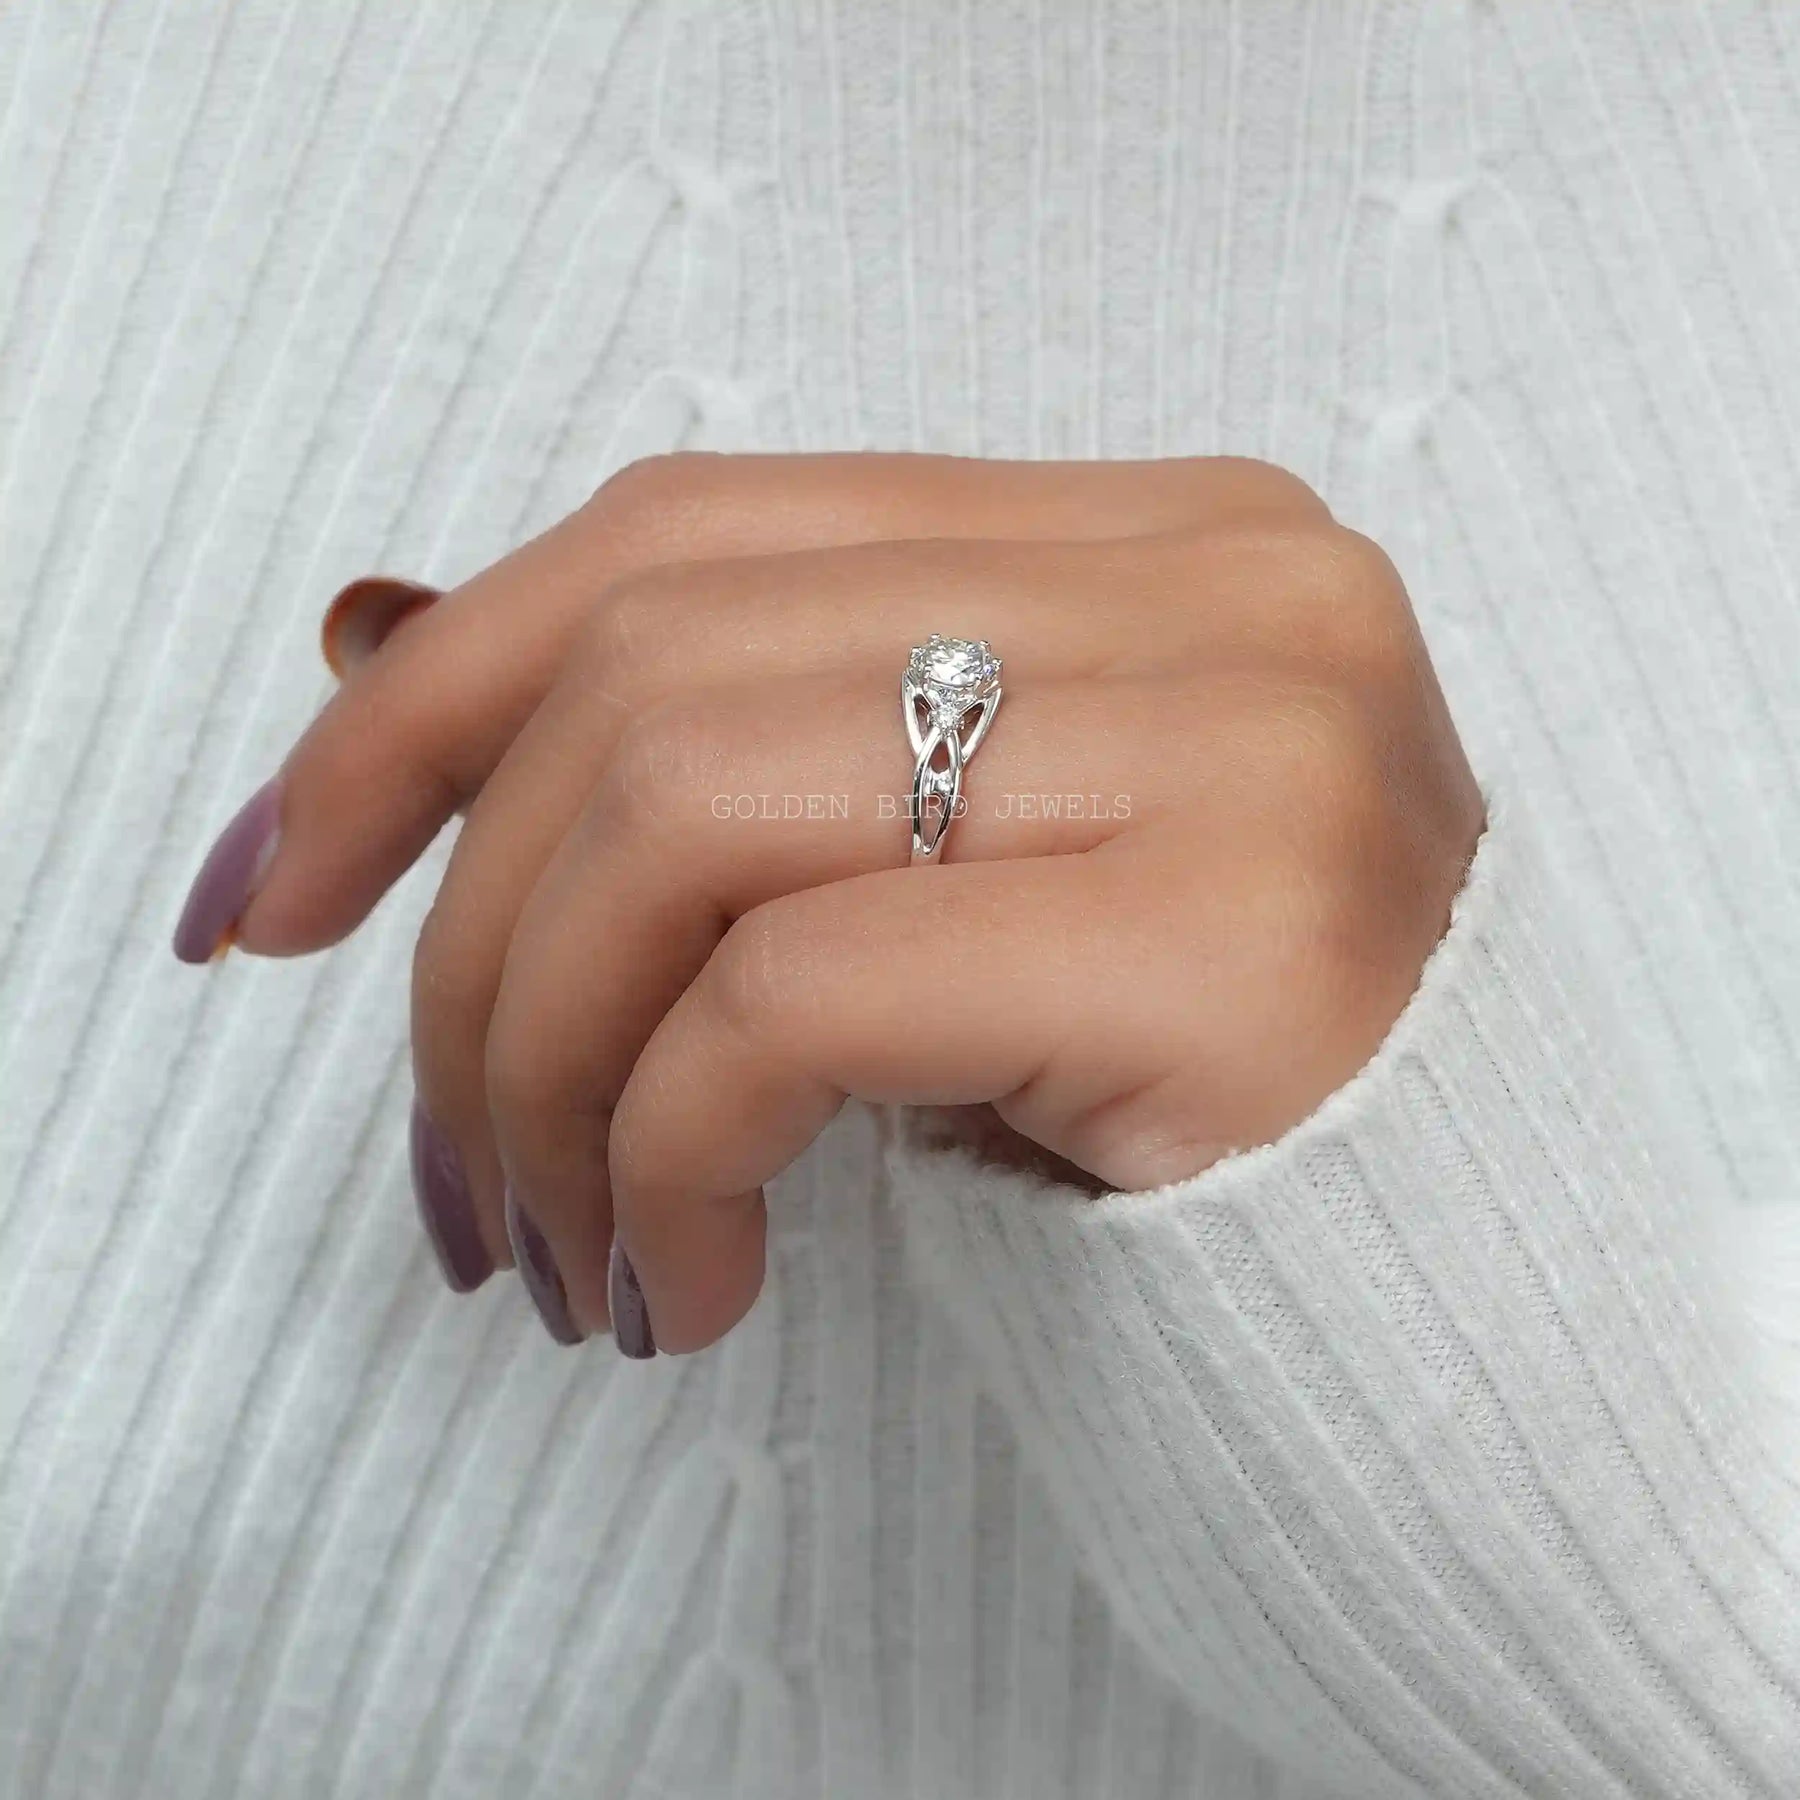 [in finger side view of moissanite anniversary ring in 14k white gold]-[Golden Bird Jewels]